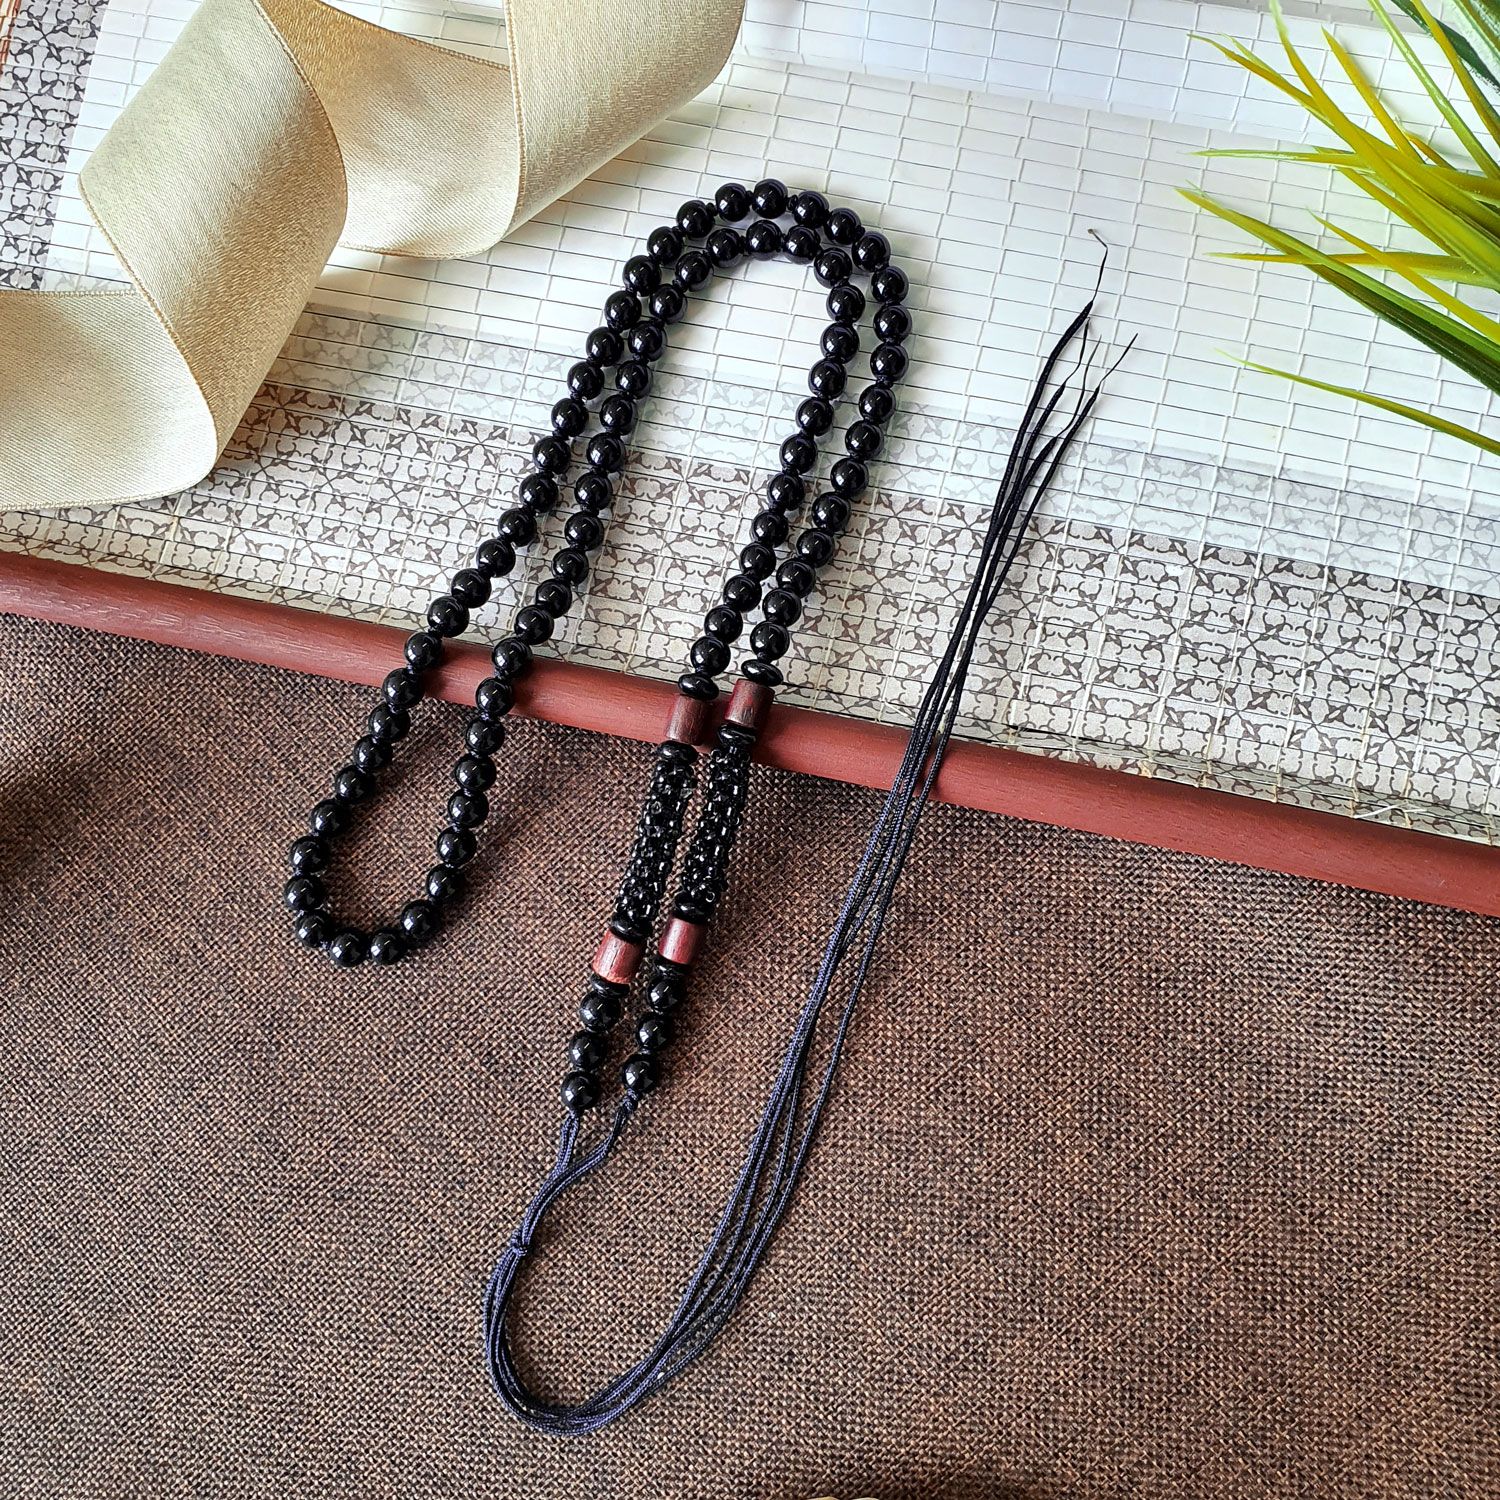 6mm 绳子(黑) + 黑玛瑙 + 木配件项链